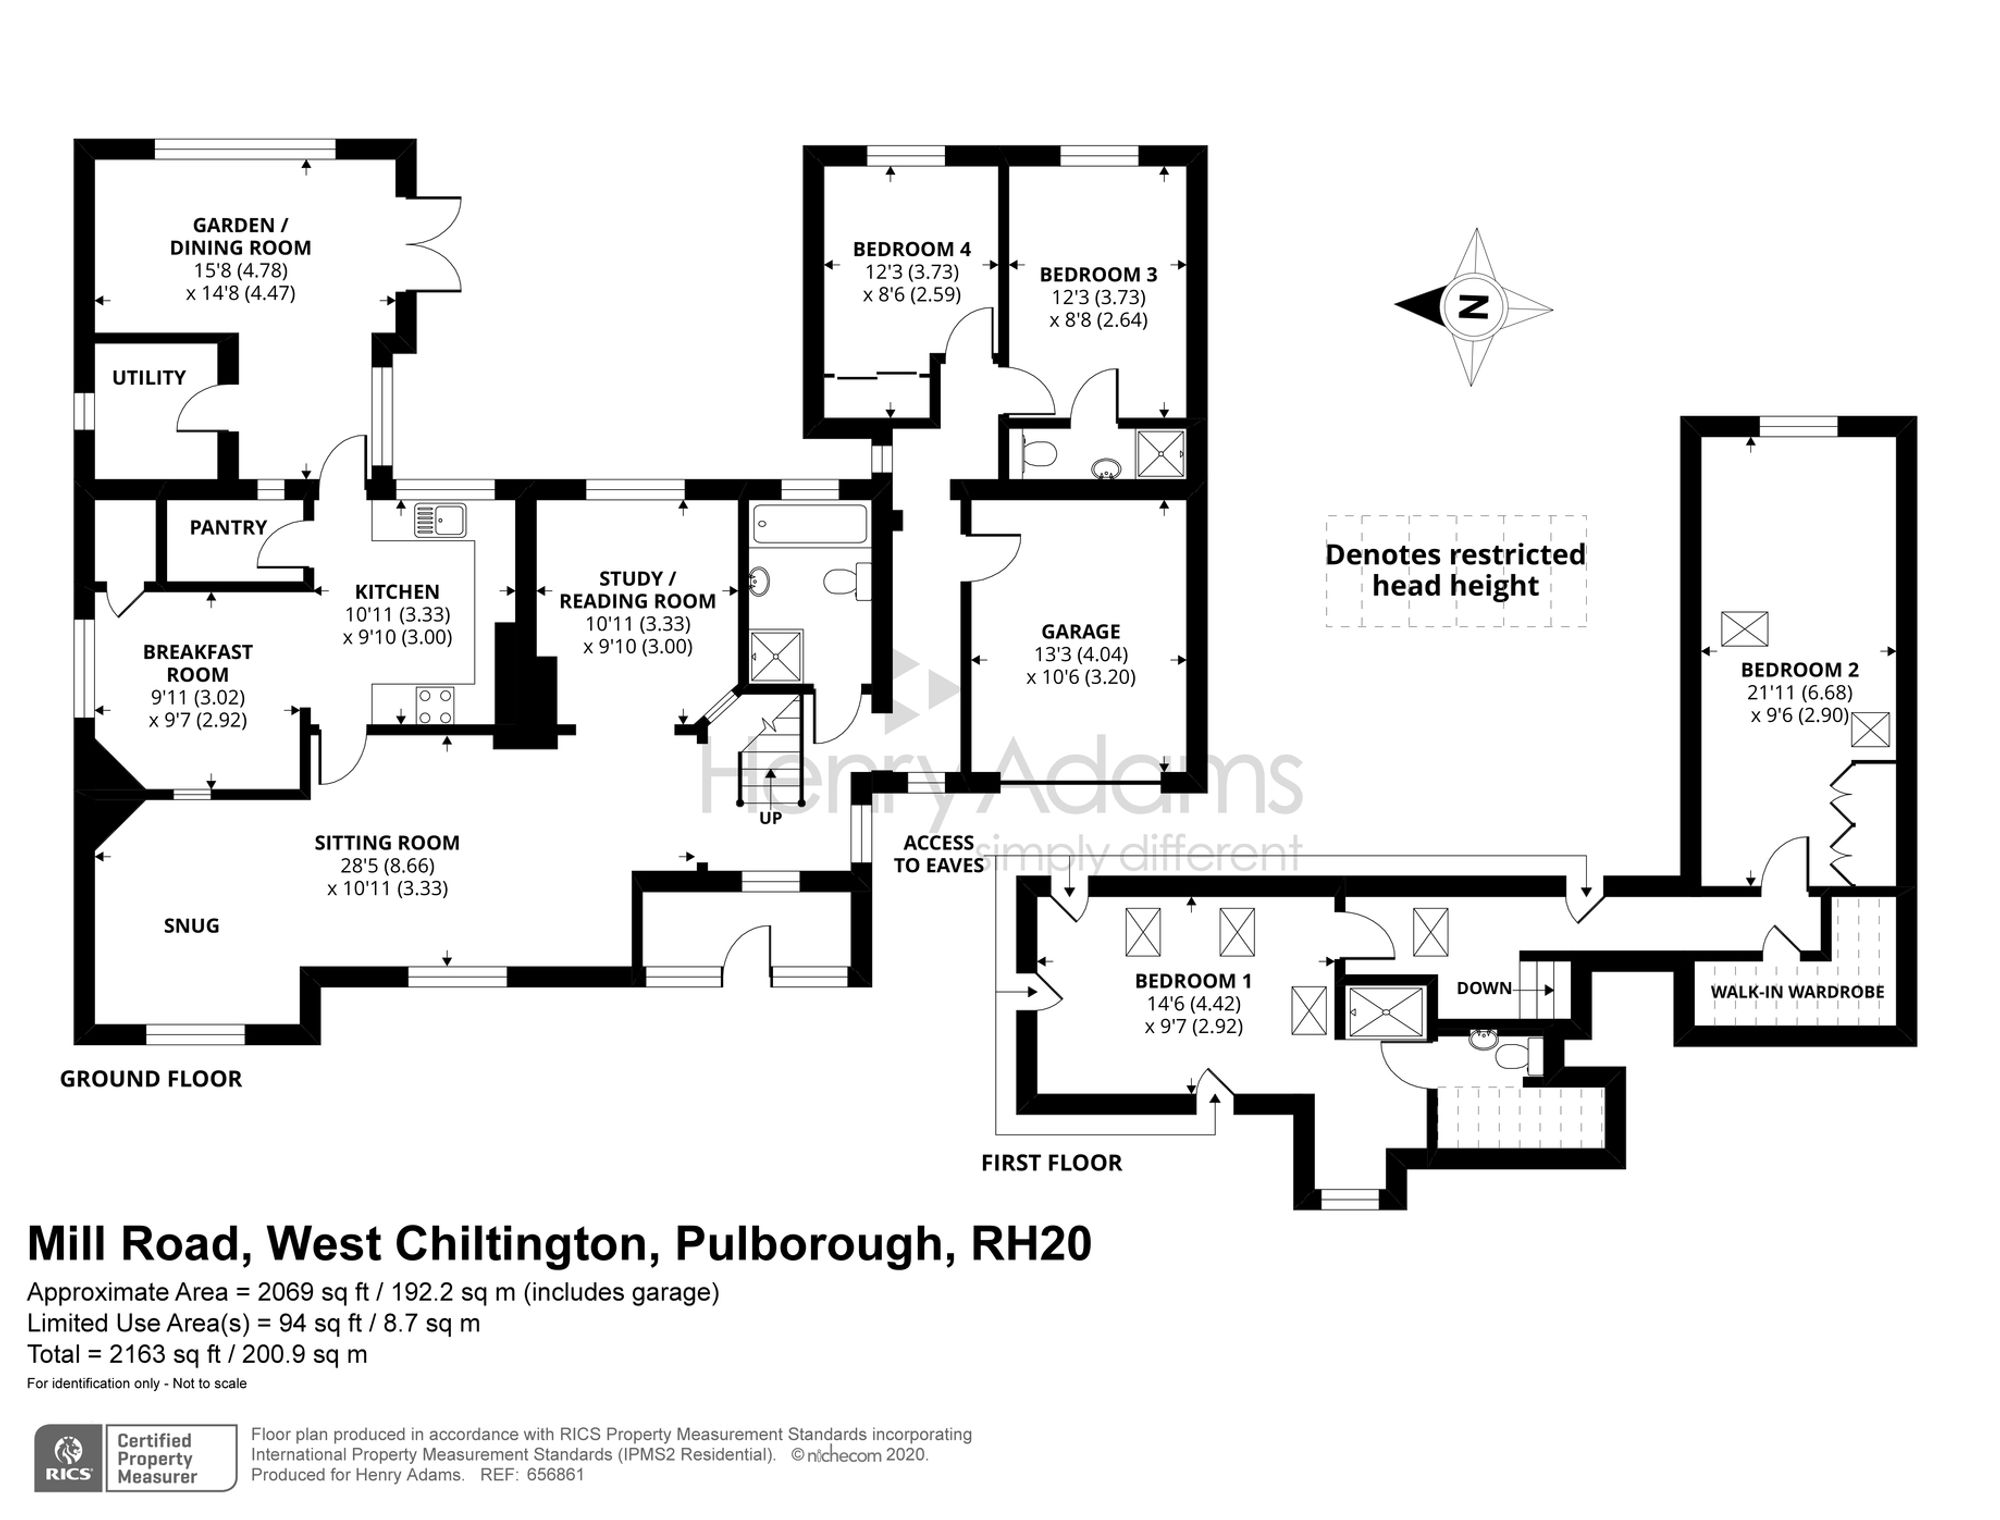 Mill Road, West Chiltington, RH20 floorplans